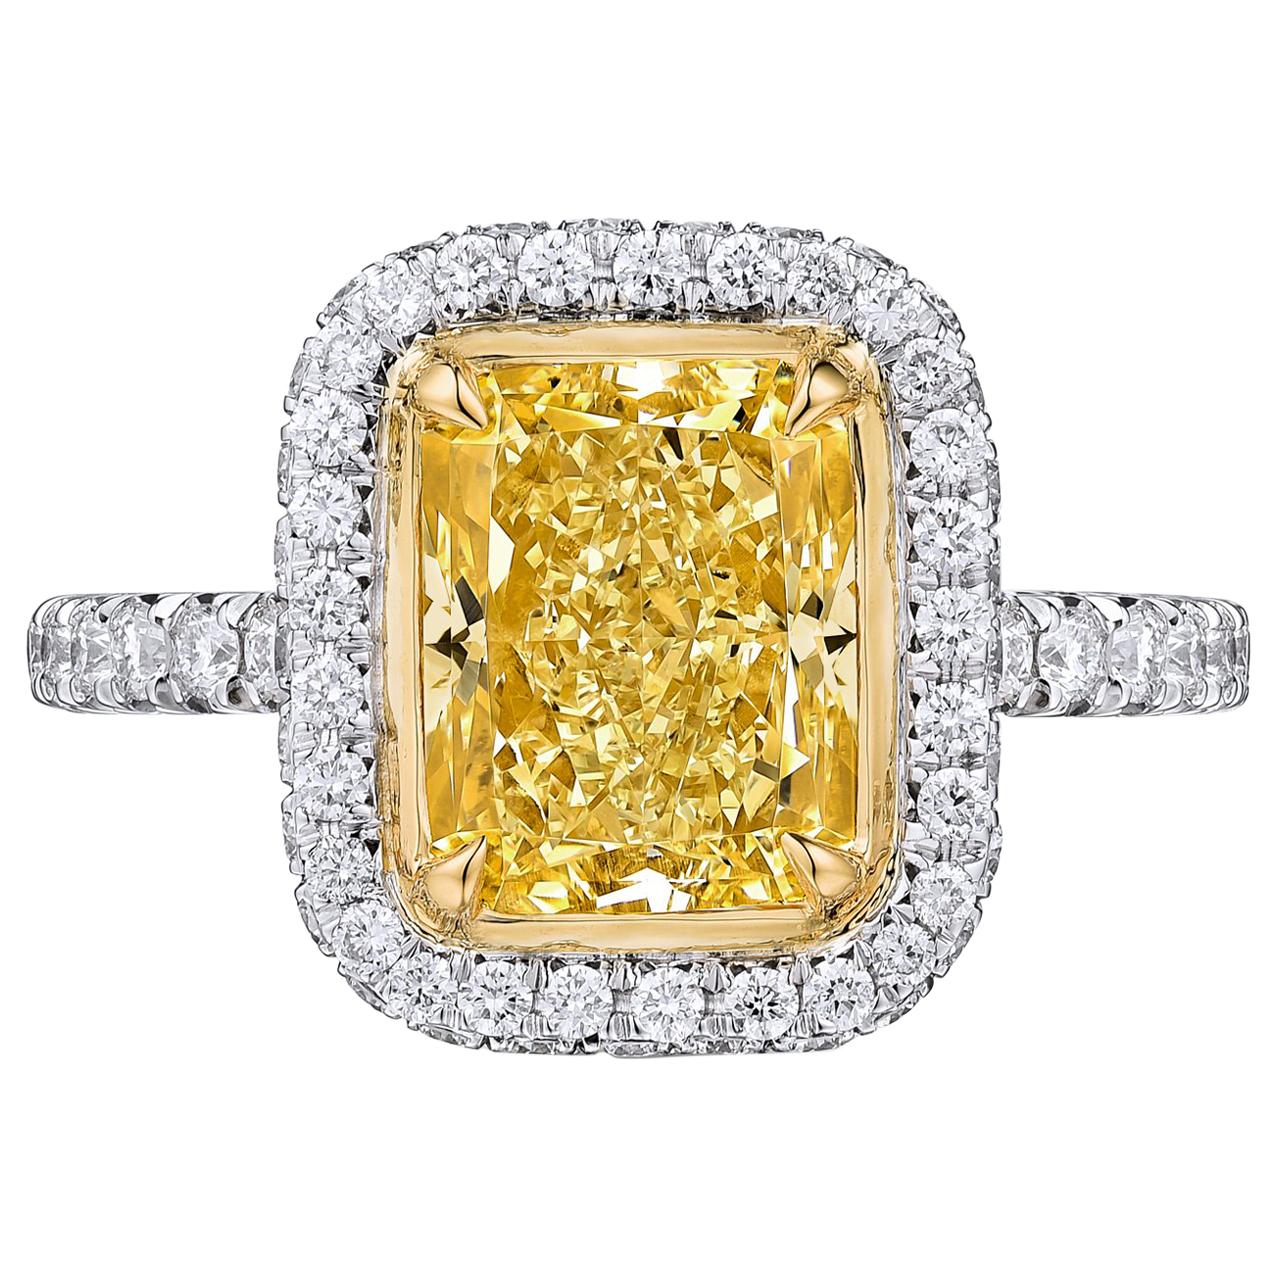 2.55 Carat Fancy Yellow Radiant Cut Diamond Engagement Ring in Platinum